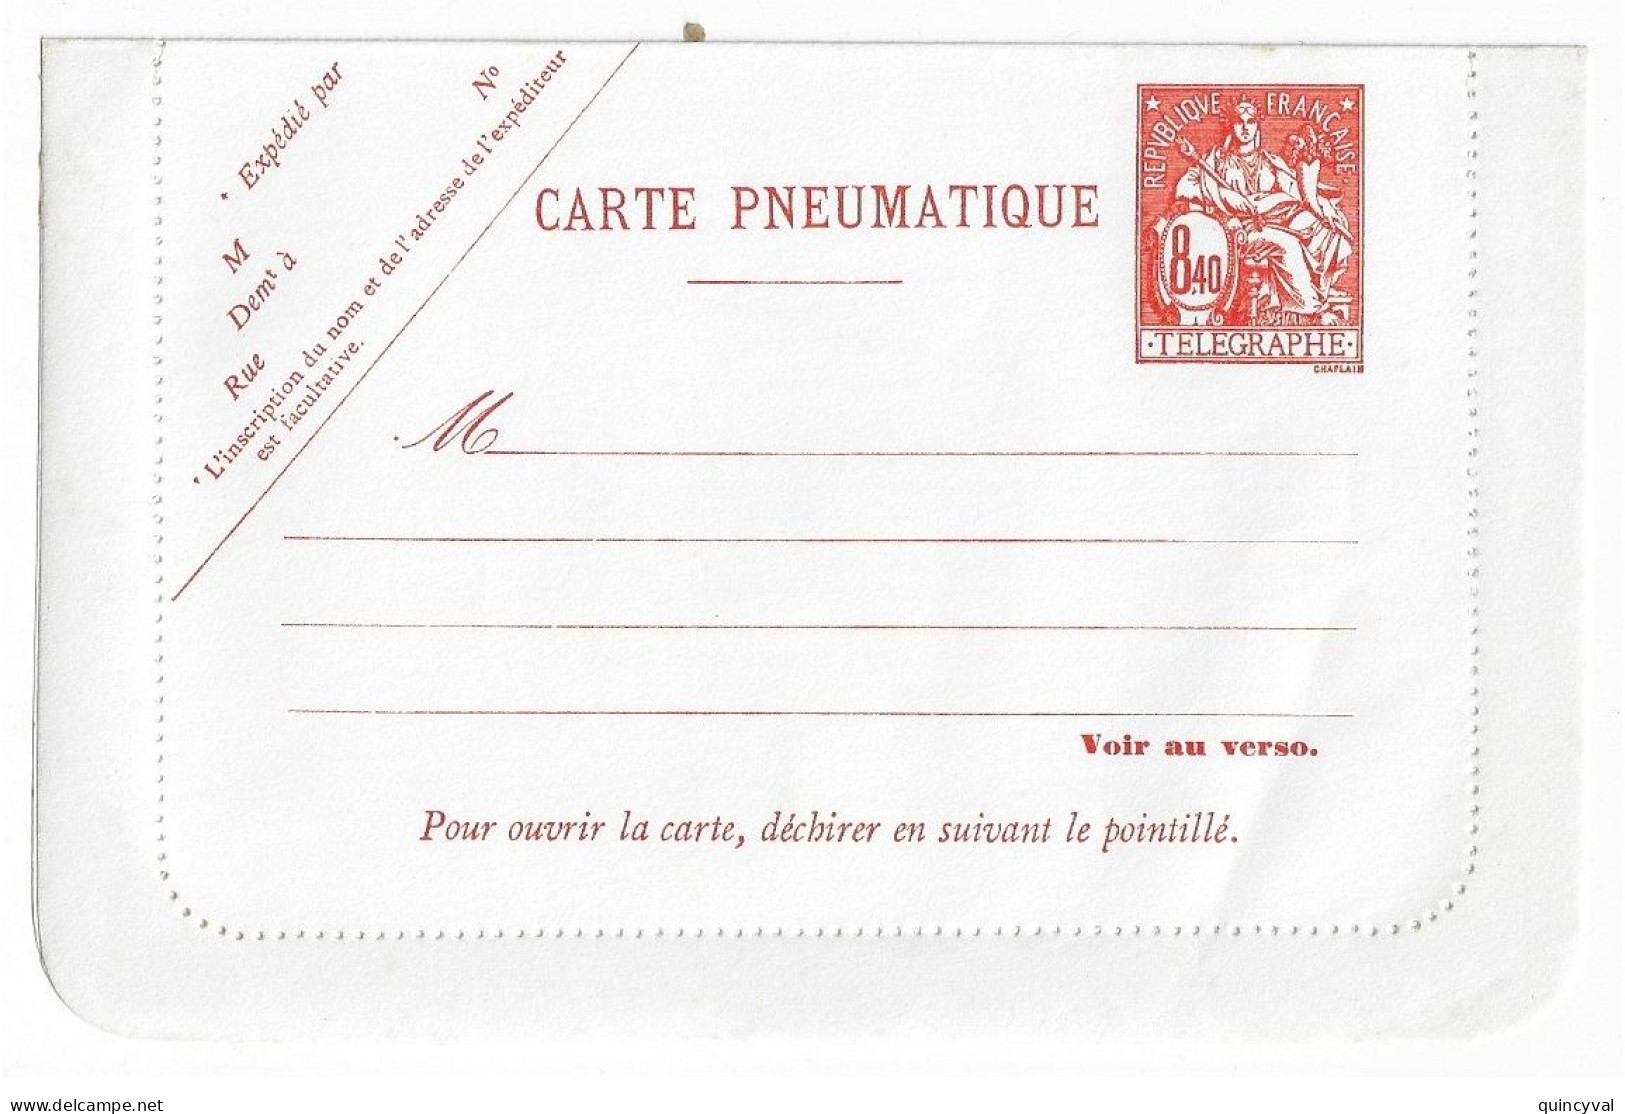 PARIS Carte Lettre Pneumatique CHAPLAIN 8,40 F Tarif 1977 Neuf Yv 2623 CLPP 8,40 F Storch V16 - Pneumatic Post